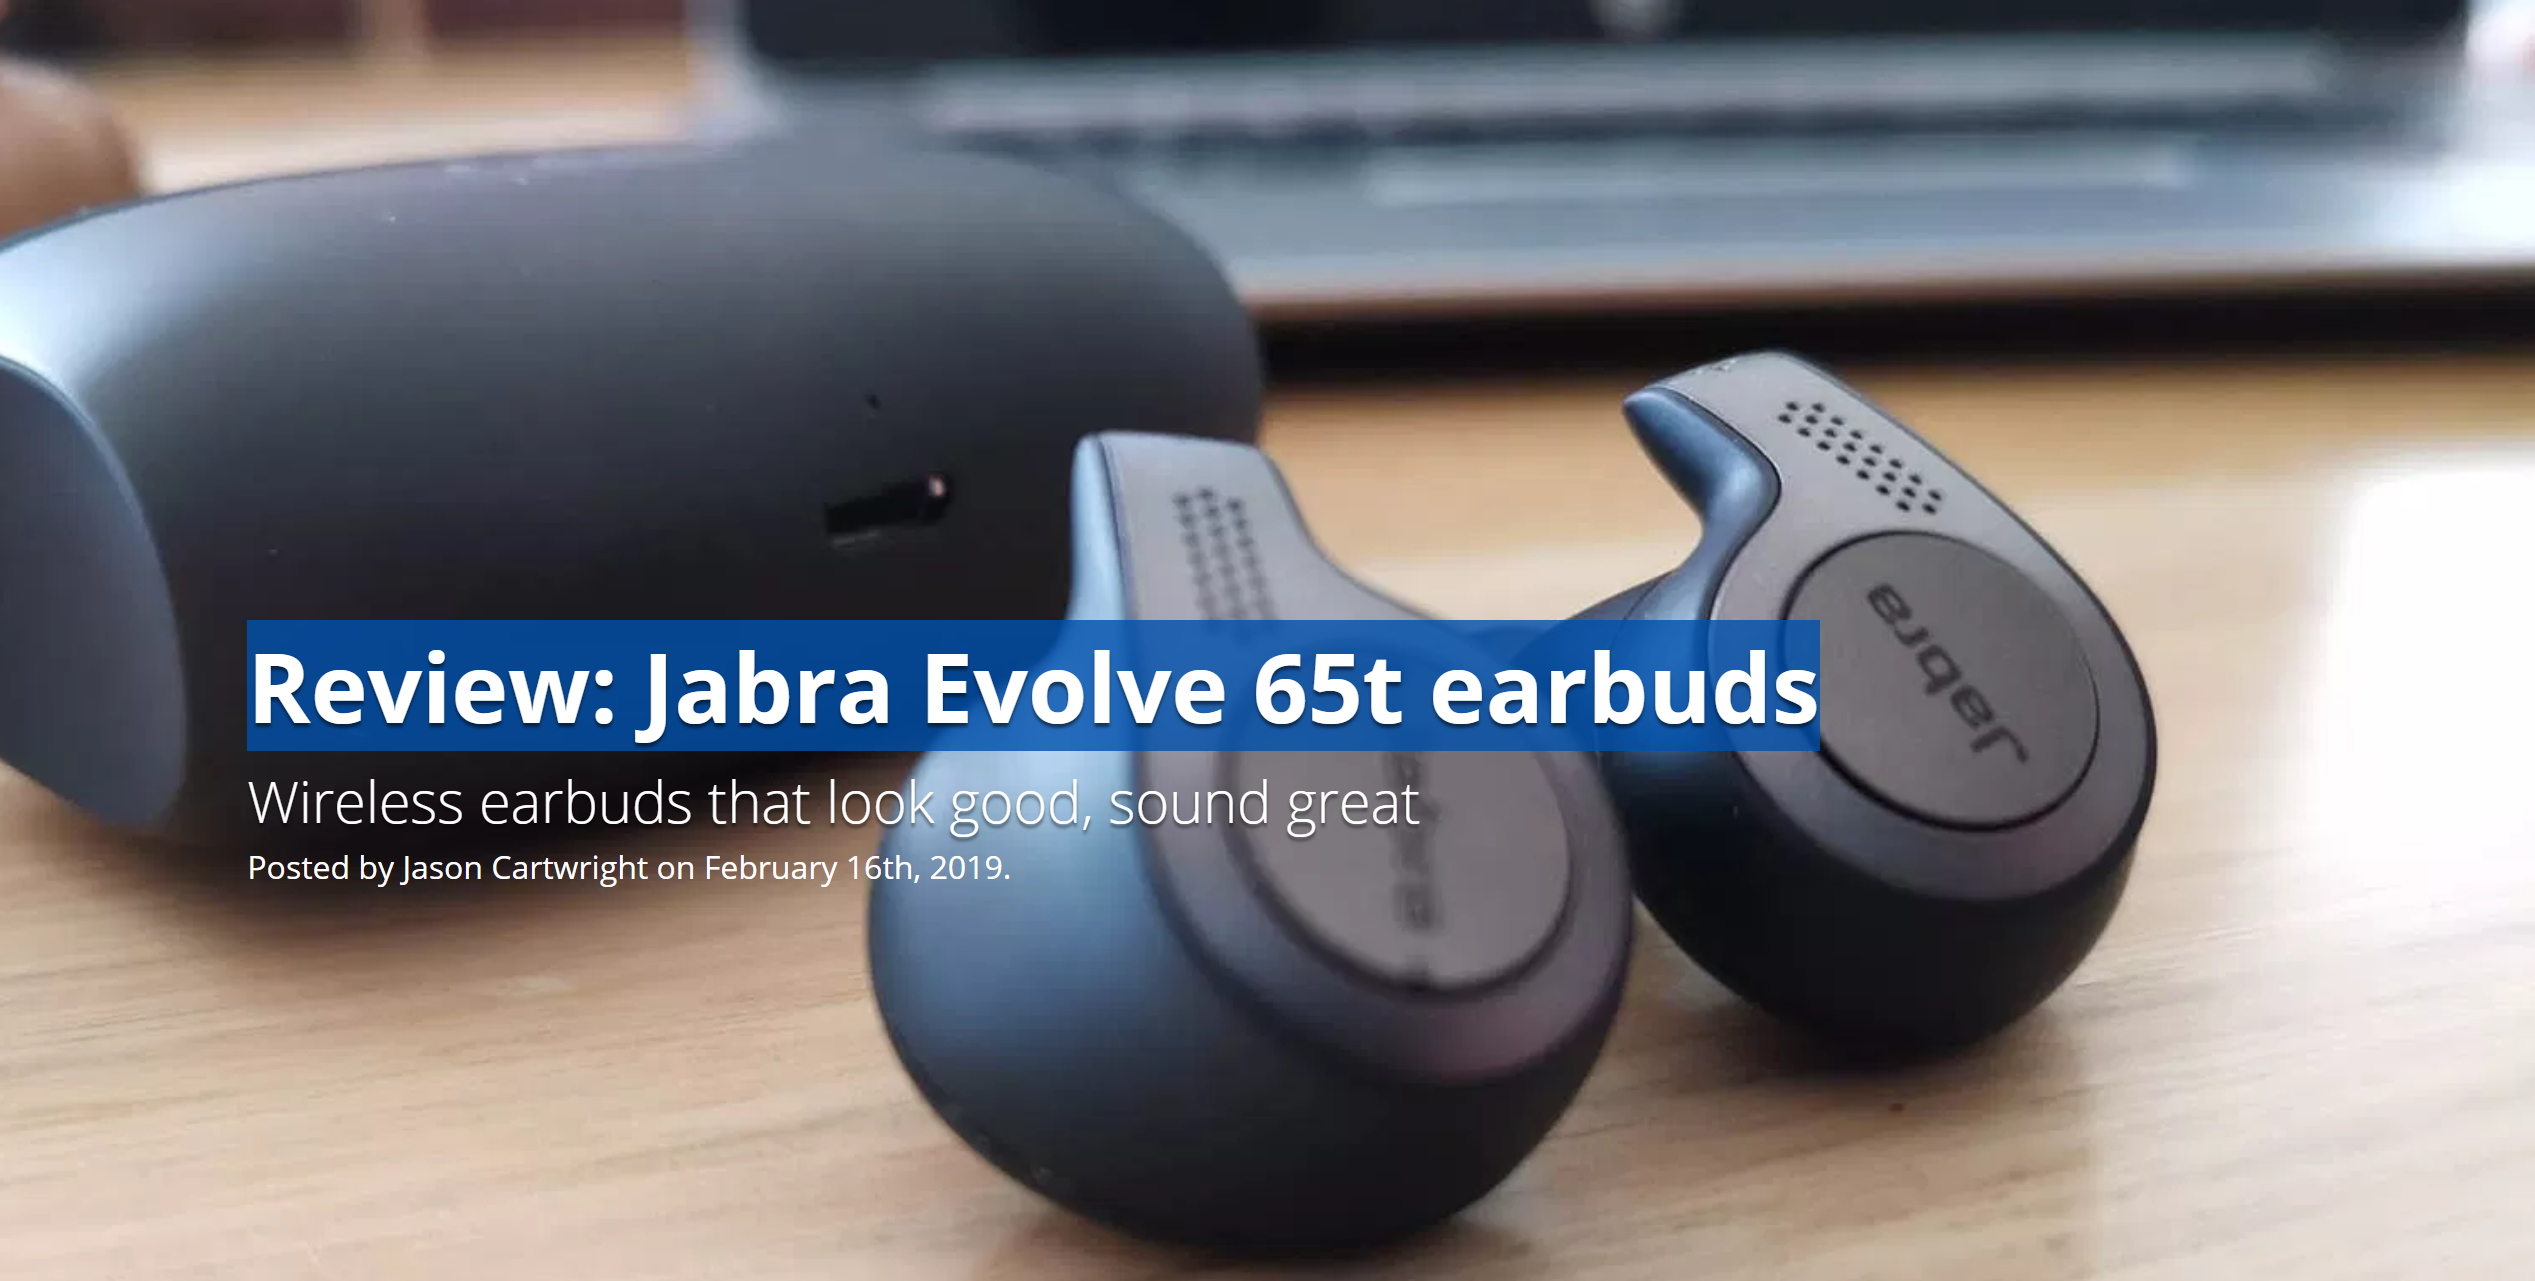 Review: Jabra Evolve 65t earbuds